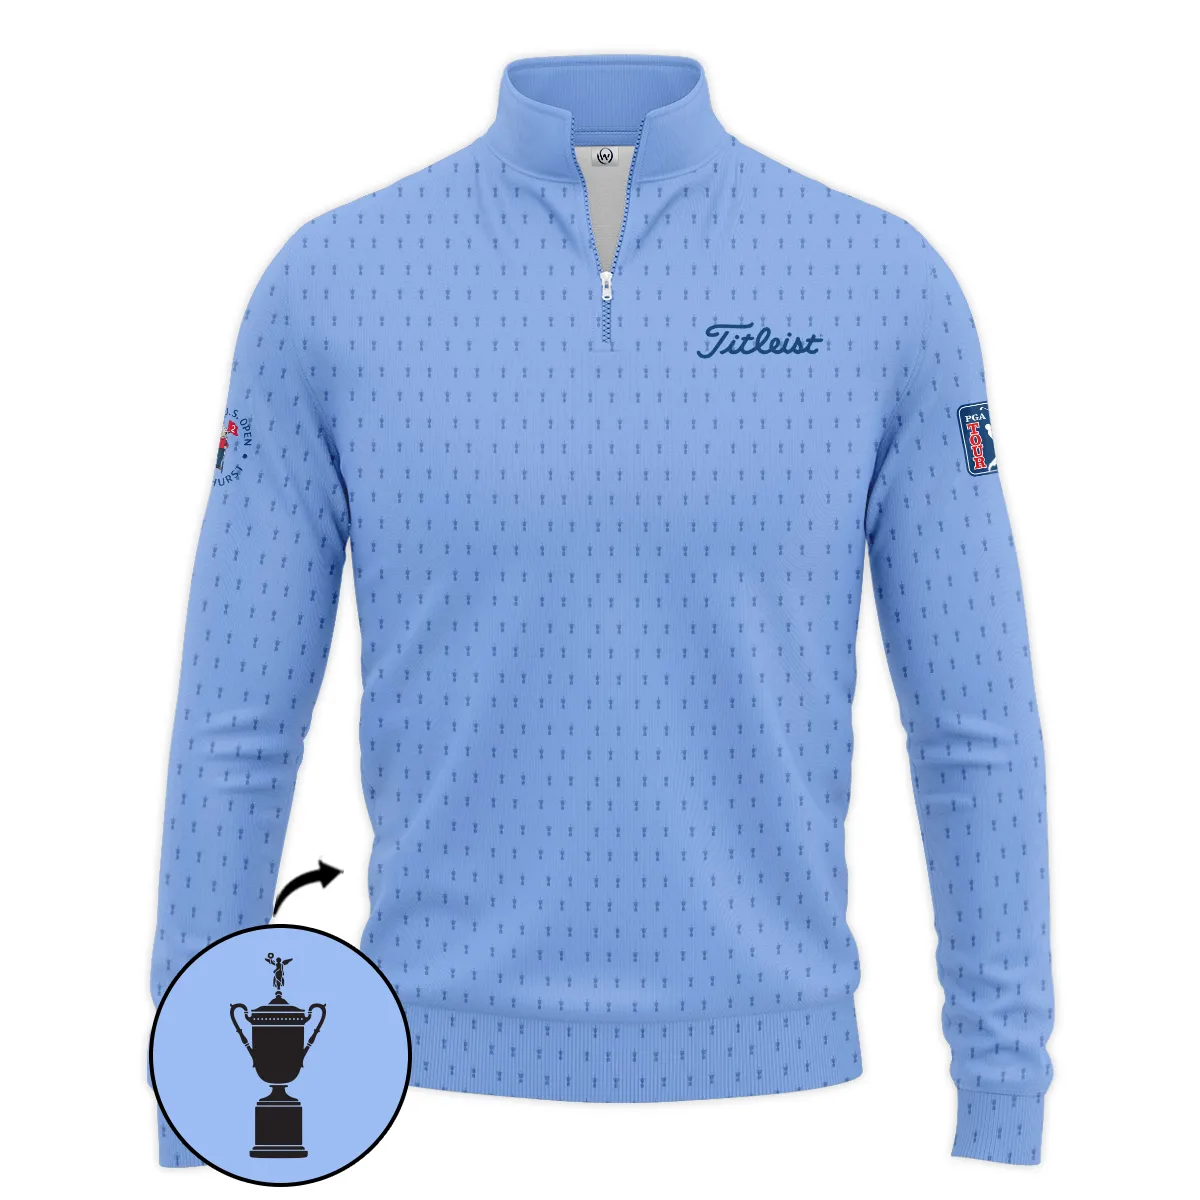 Golf Pattern Cup Blue 124th U.S. Open Pinehurst Pinehurst Titleist Polo Shirt Style Classic